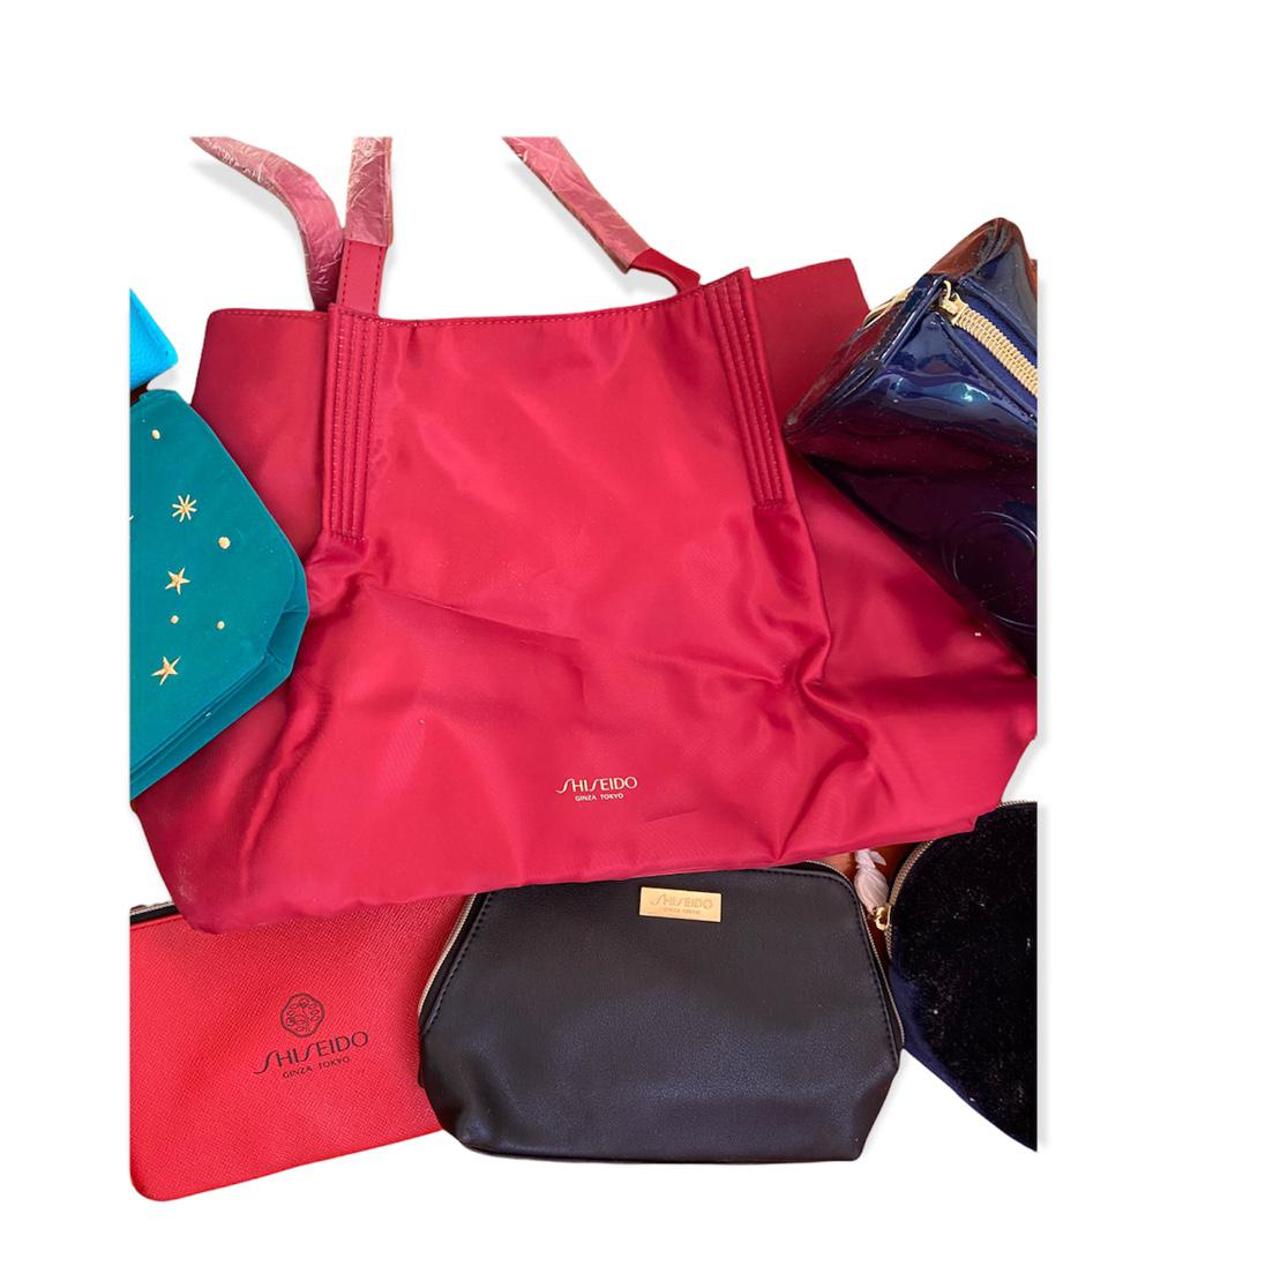 Sephora Women's Bag (3)